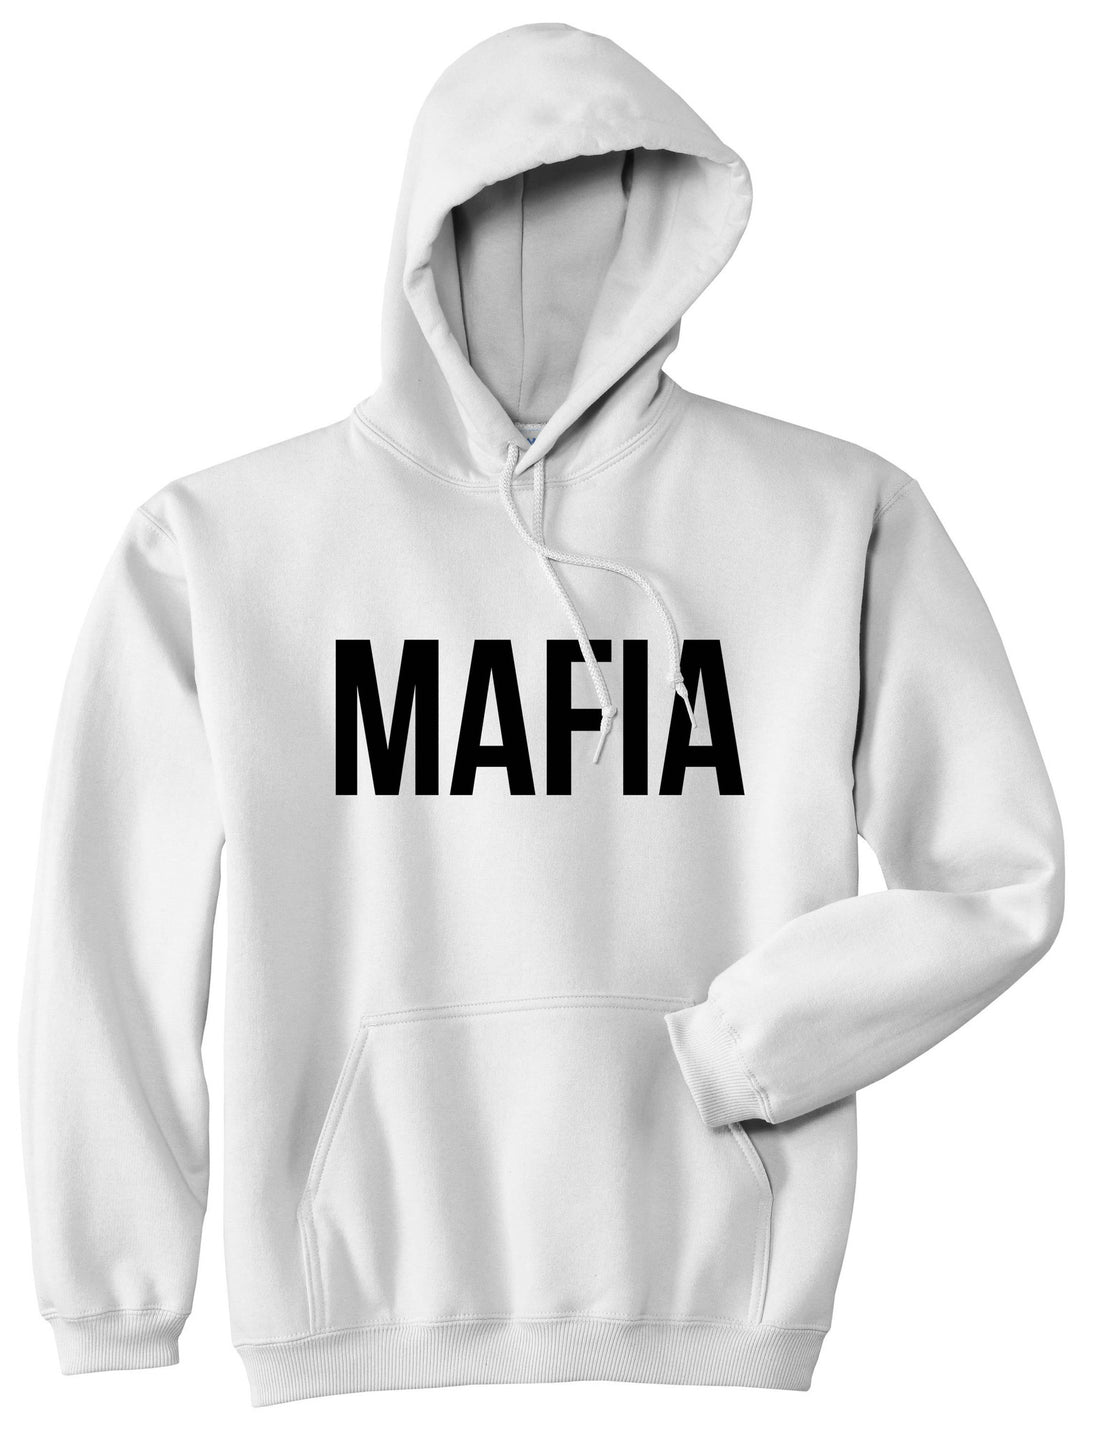 Mafia Junior Italian Mob  Boys Kids Pullover Hoodie Hoody in White By Kings Of NY